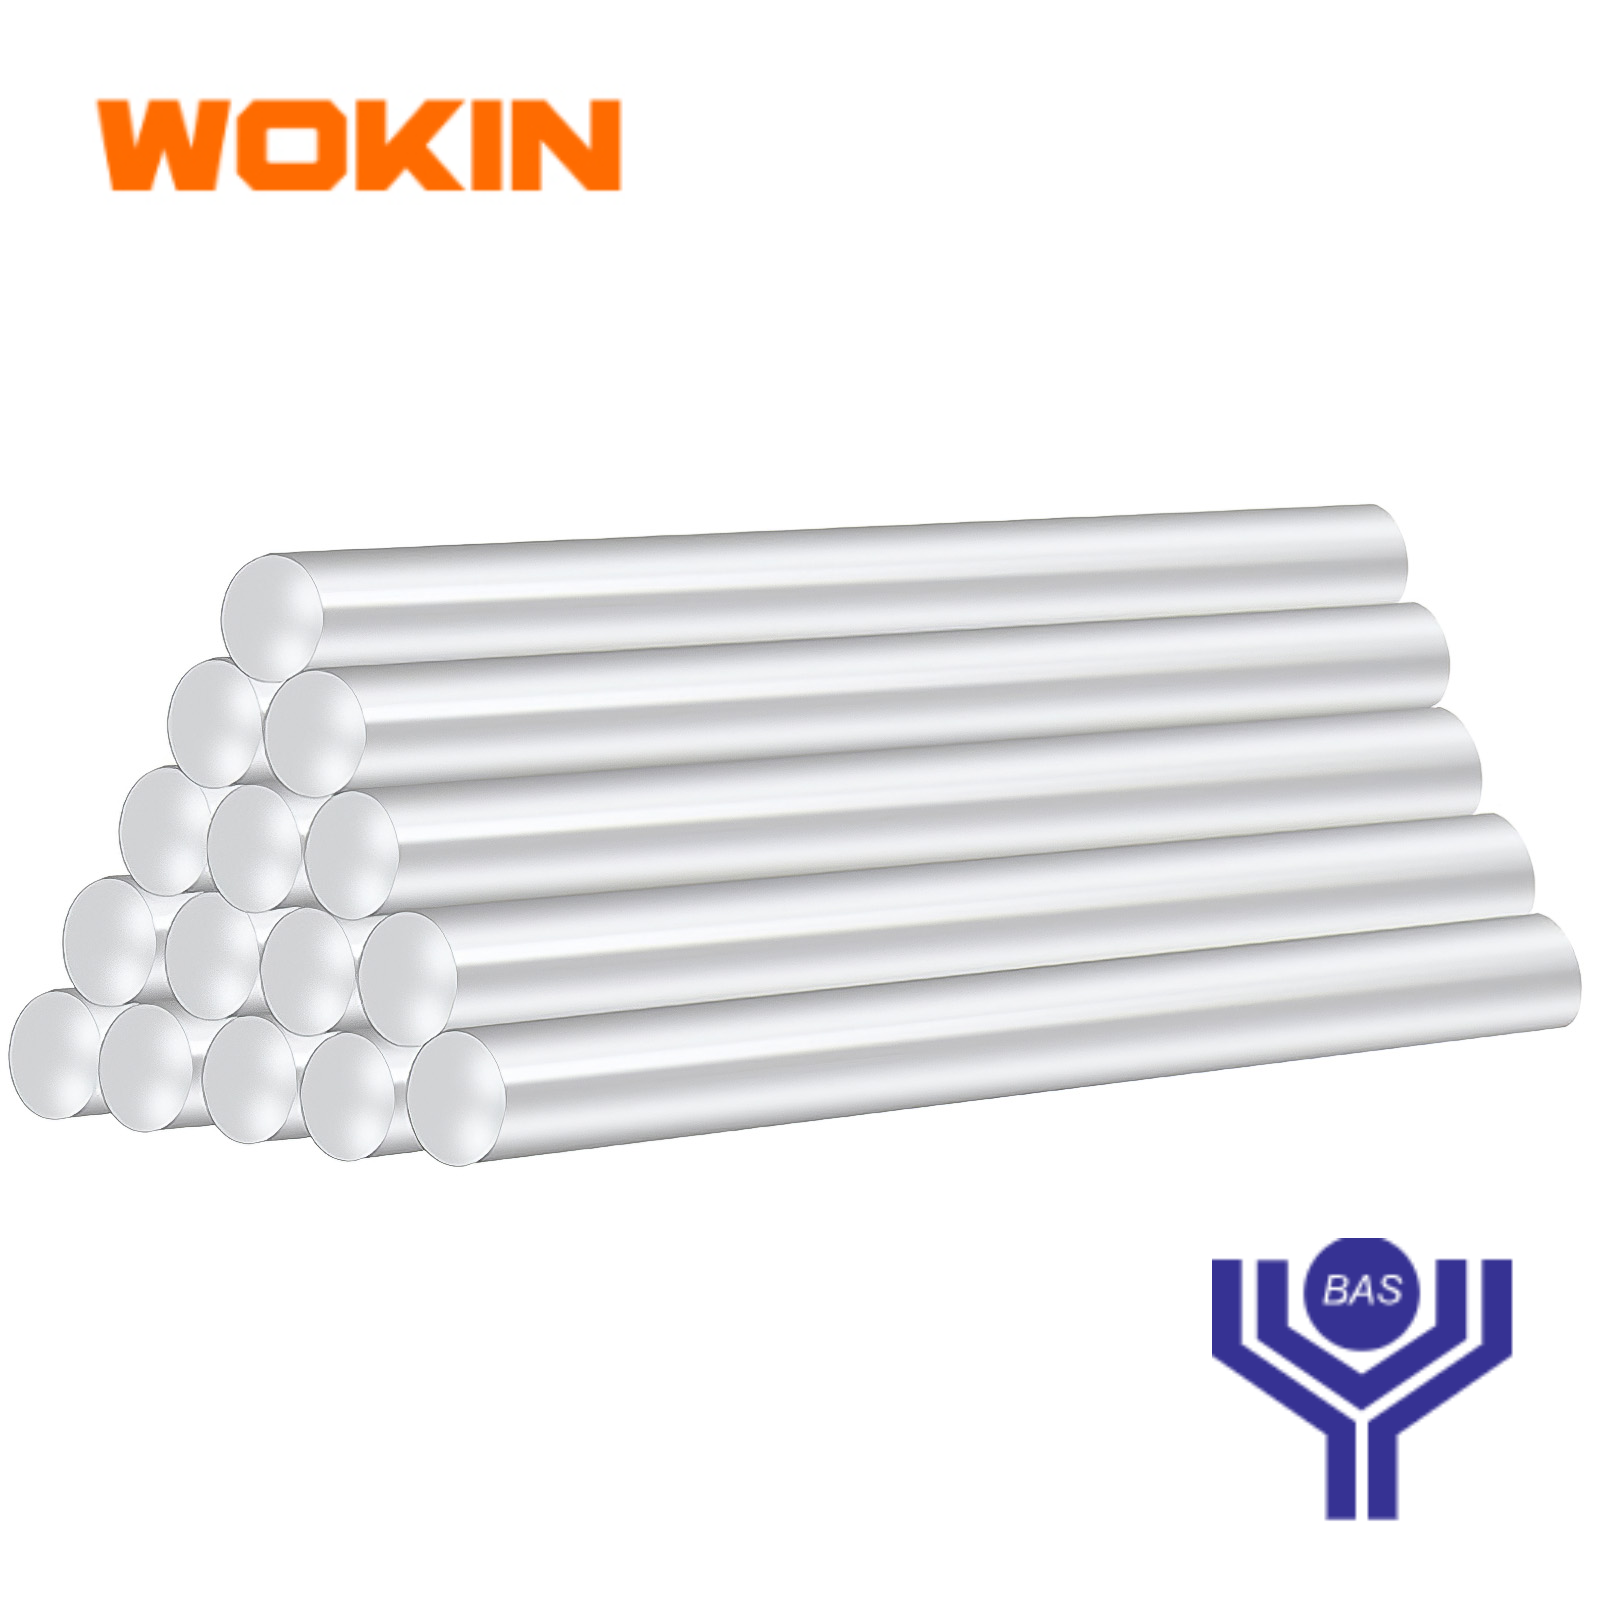 Hot Melt Glue Stick set (12pc) Wokin Brand - BAS Kuwait